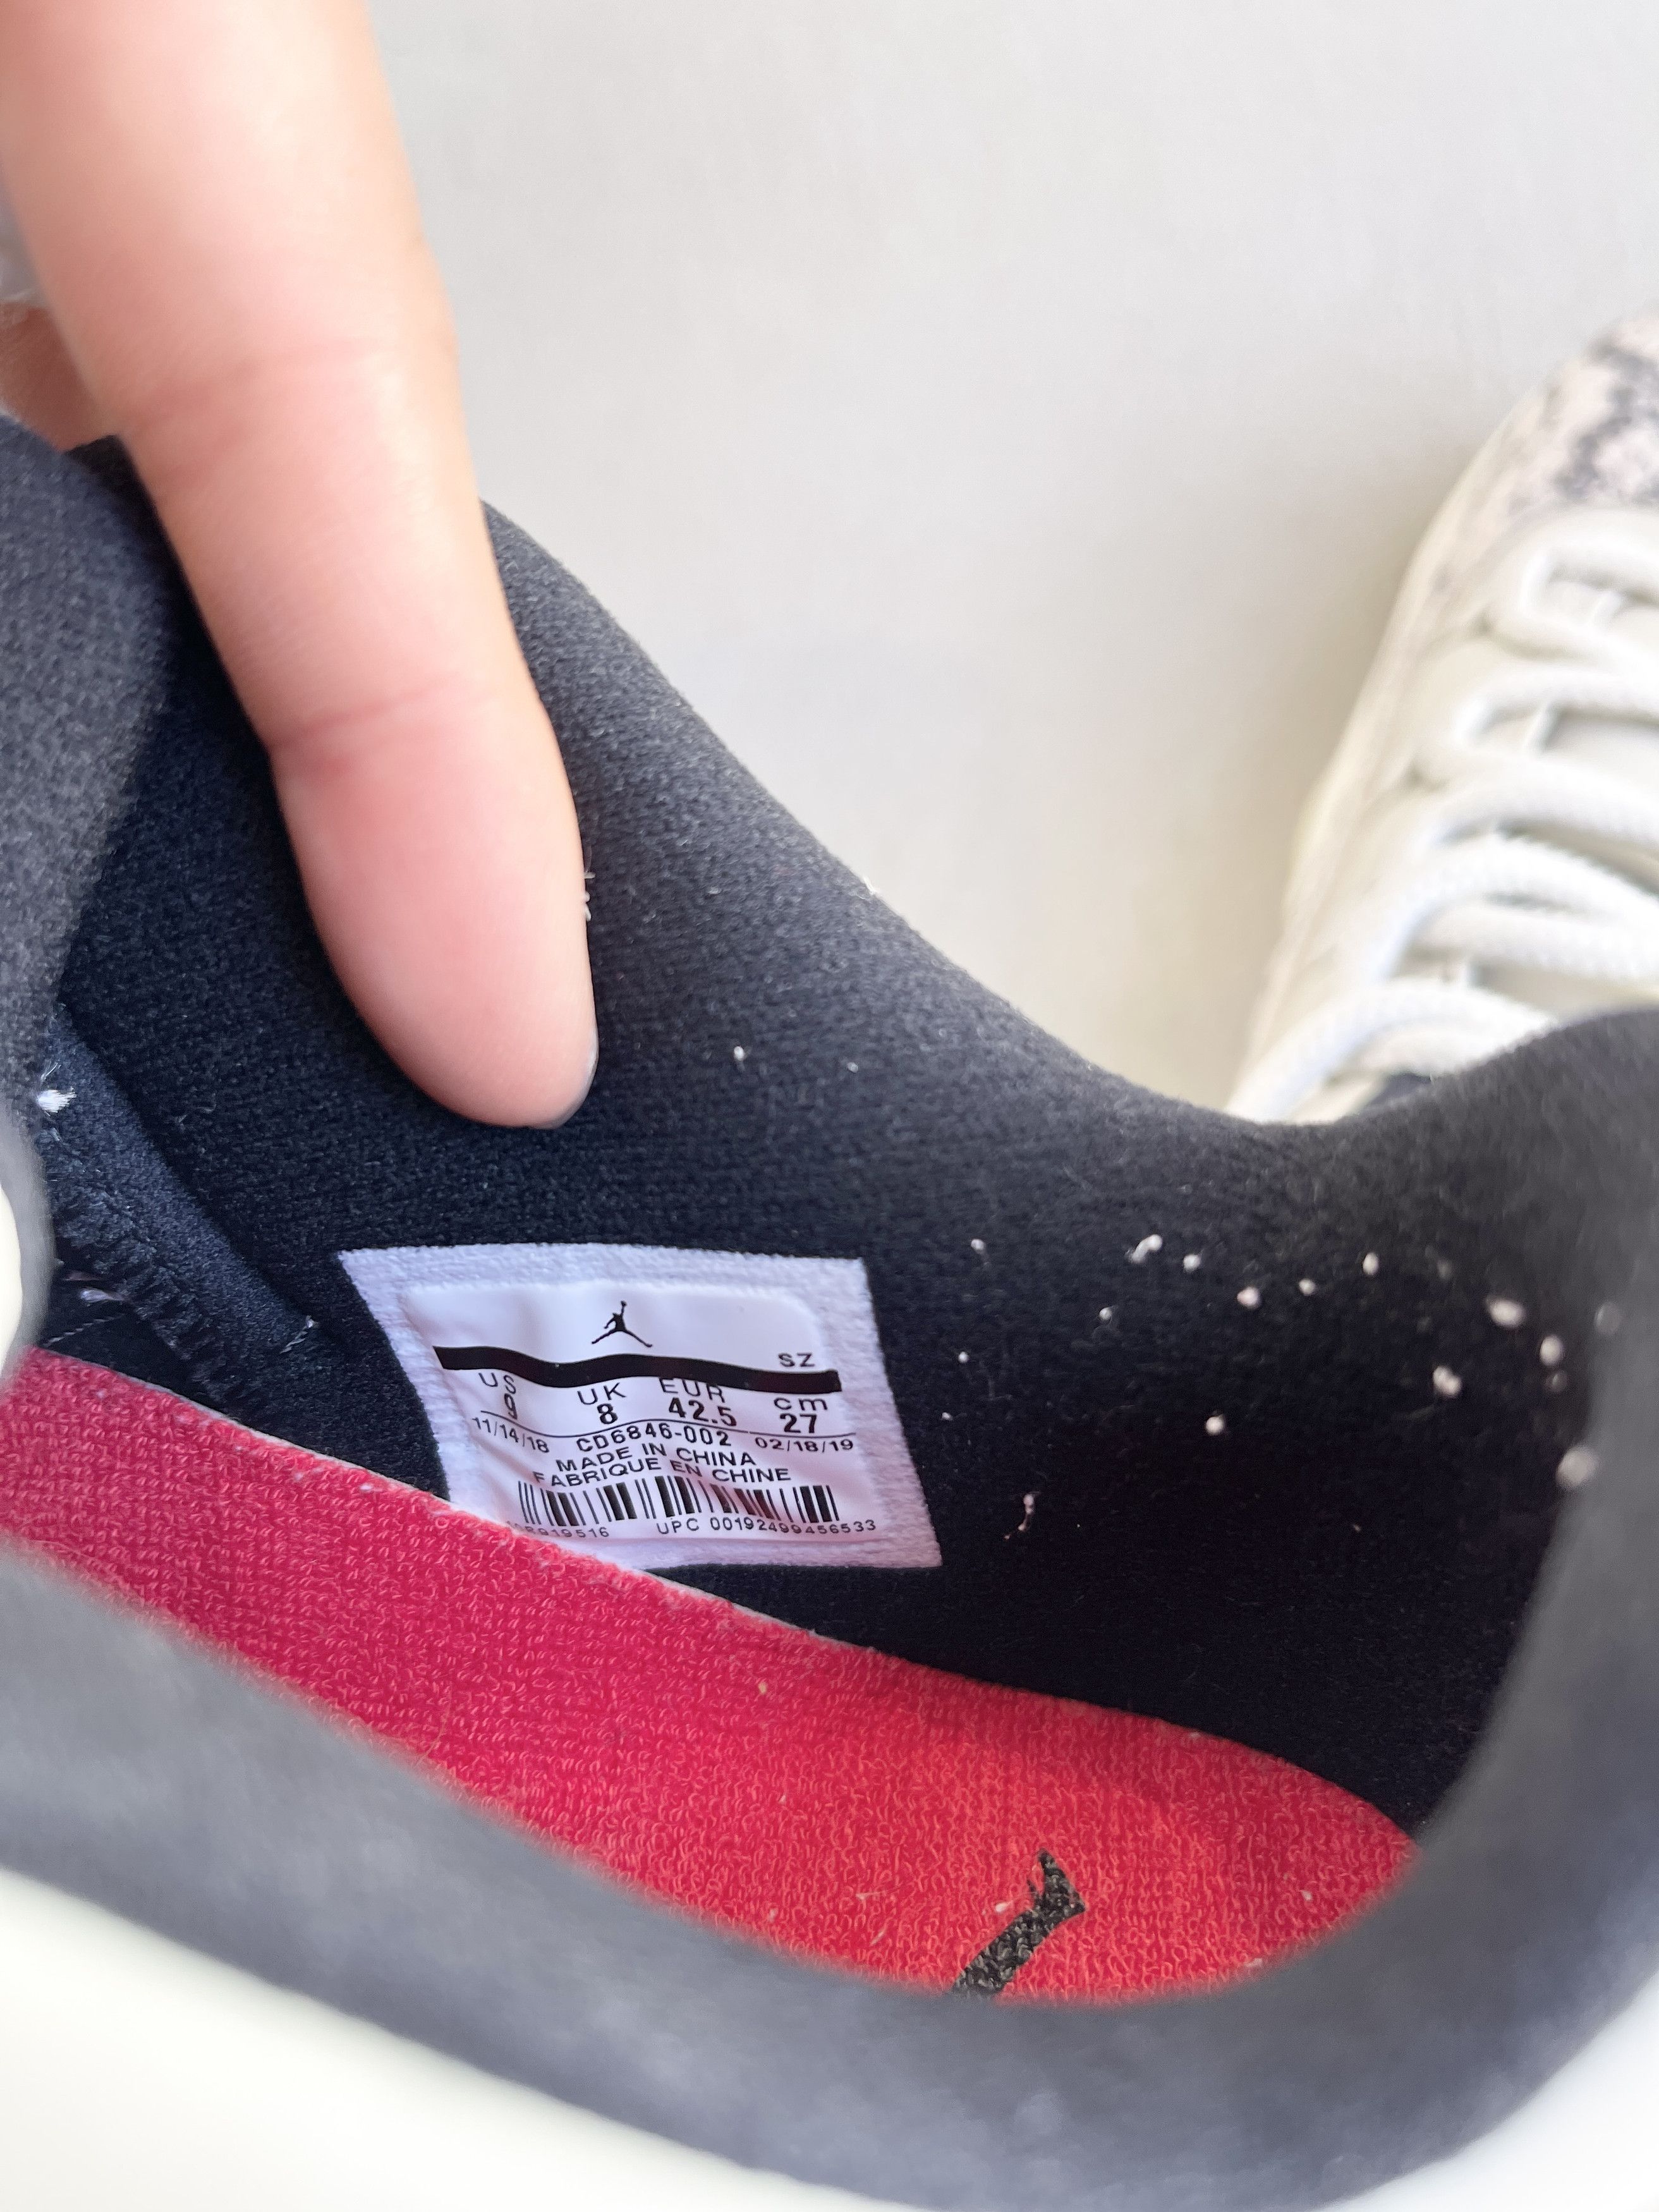 🔥 Nike Air Jordan 11 Retro Low Snake Light Bone 2019 - 10